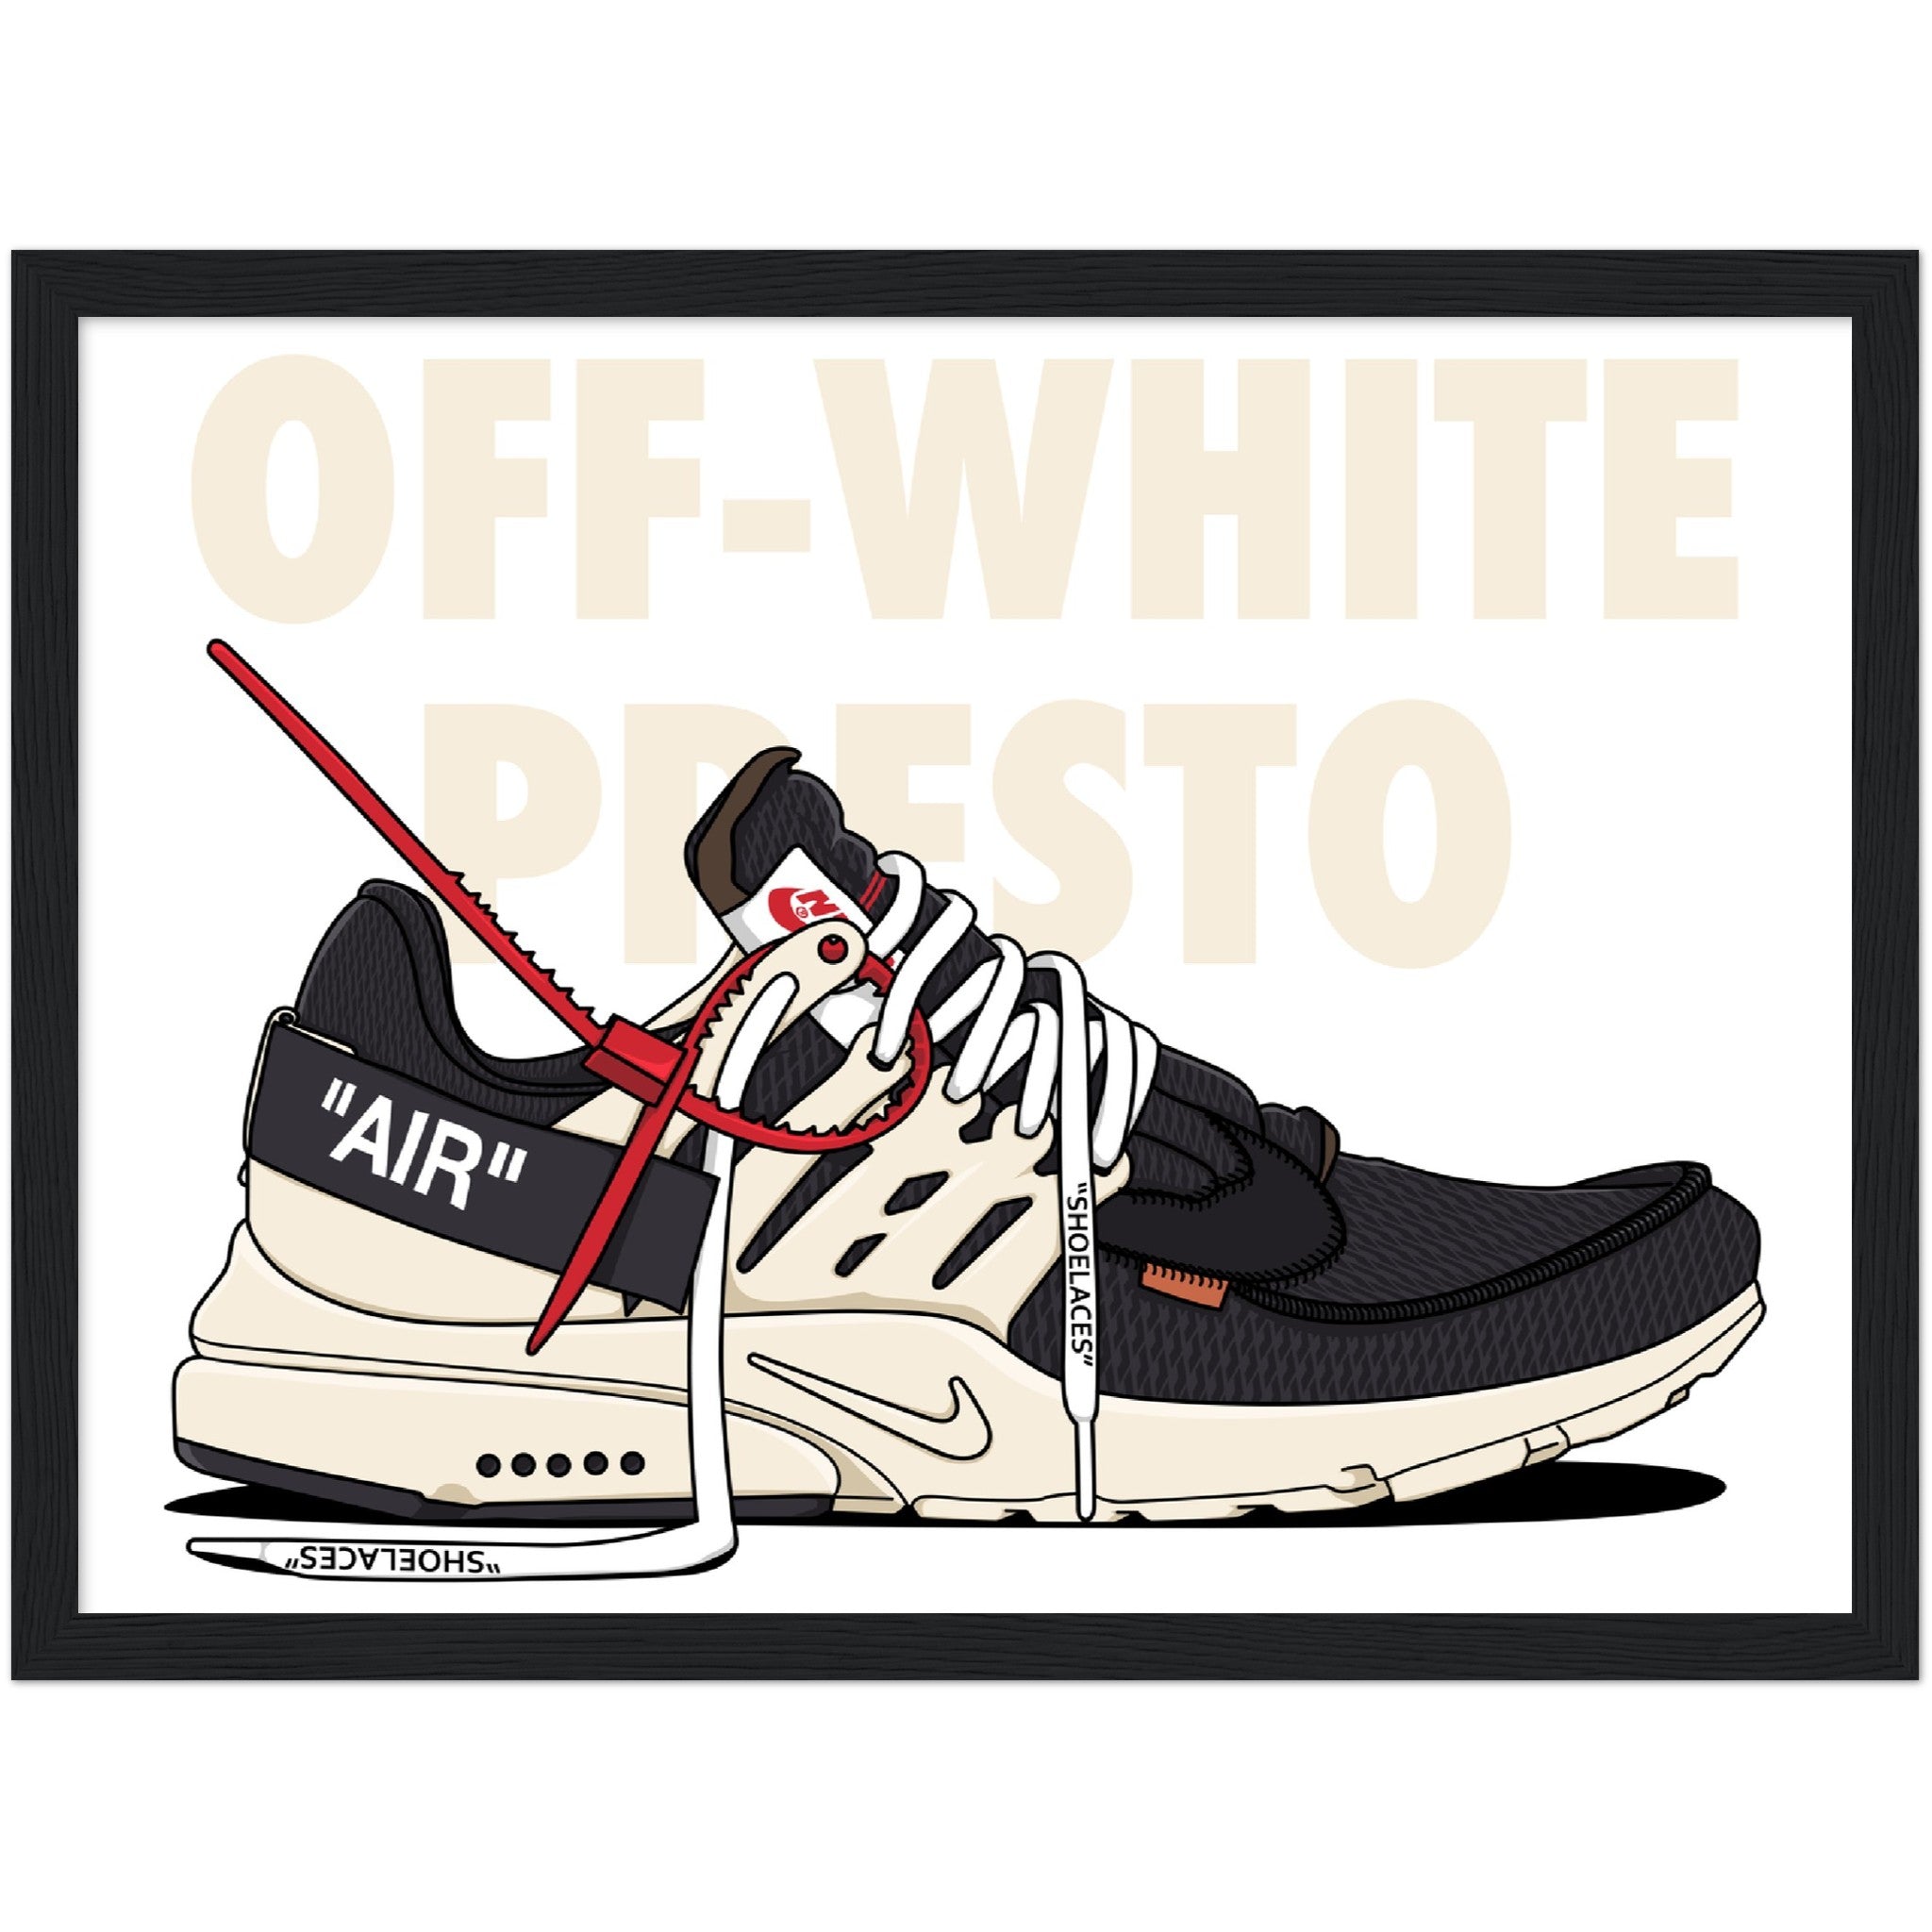 AIR OFF-WHITE PRESTO – Sneaker Sketches